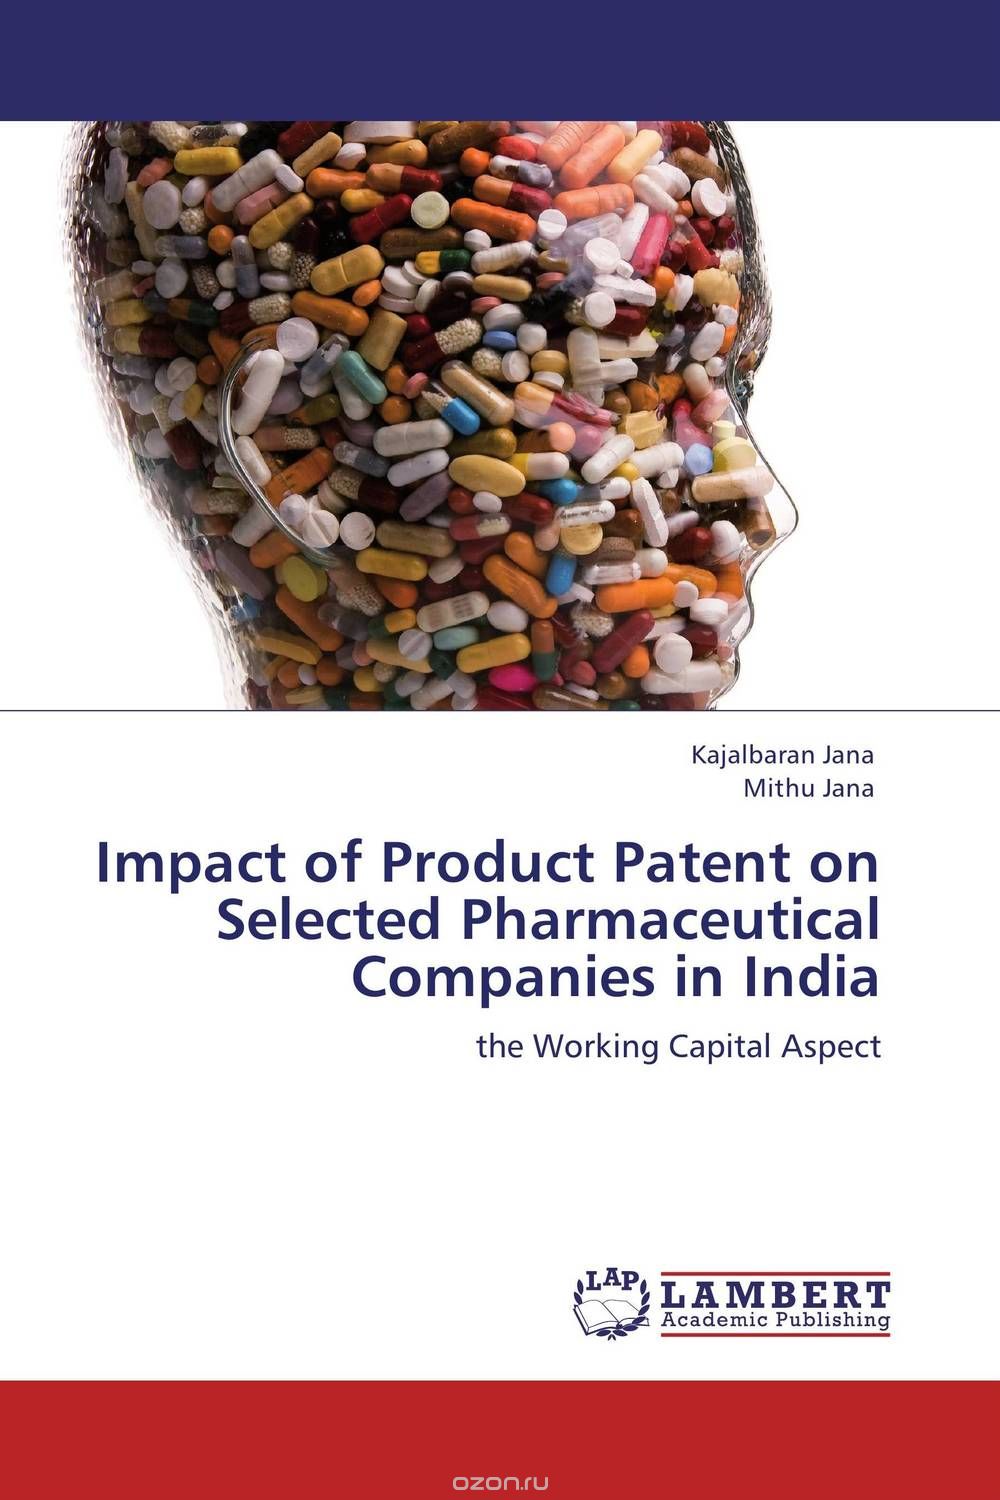 Скачать книгу "Impact of Product Patent on Selected Pharmaceutical Companies in India"